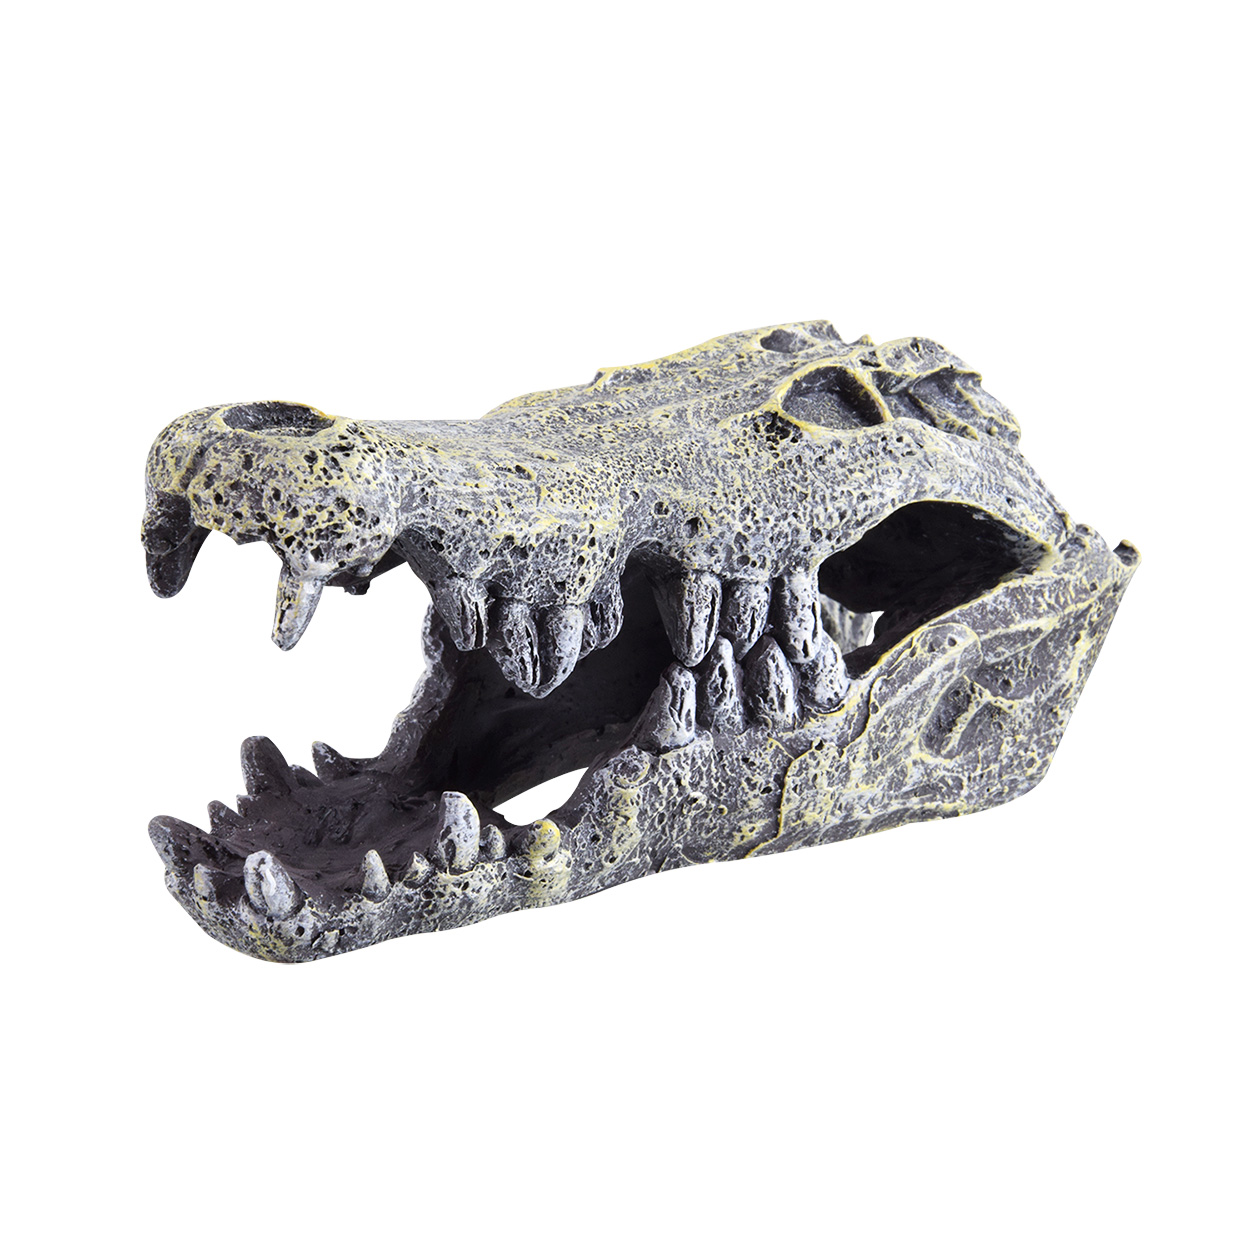 Treasures underwater Crâne de crocodile - Crocodile Skull